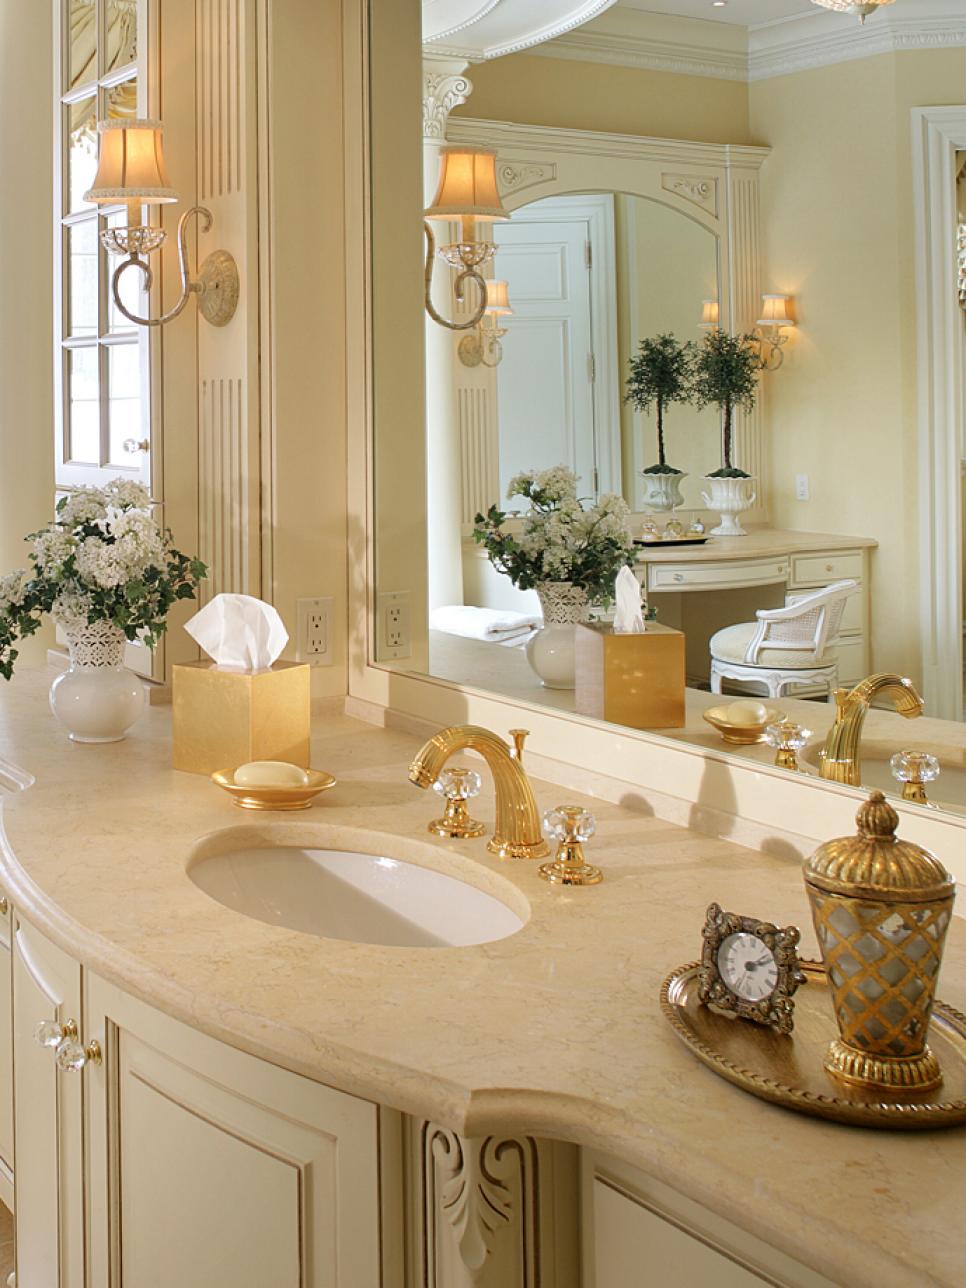 Master Bathroom With Romantic Style | Peter Salerno | HGTV